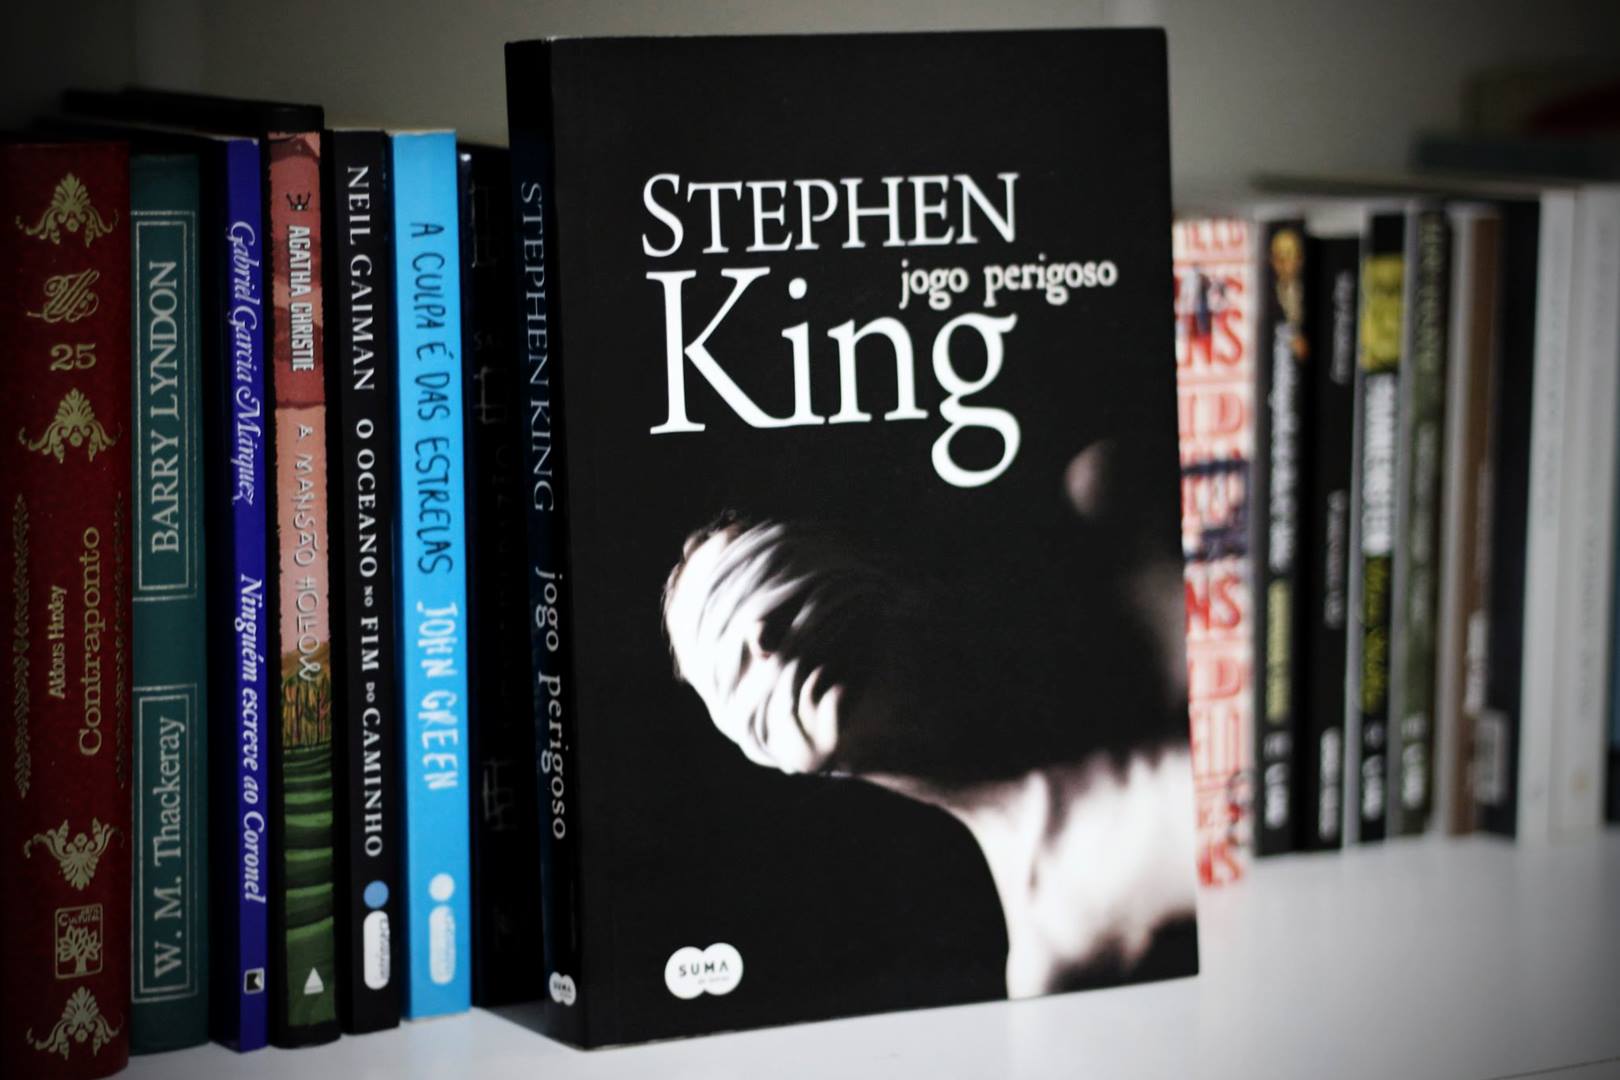 Resenha: Jogo Perigoso - Stephen King